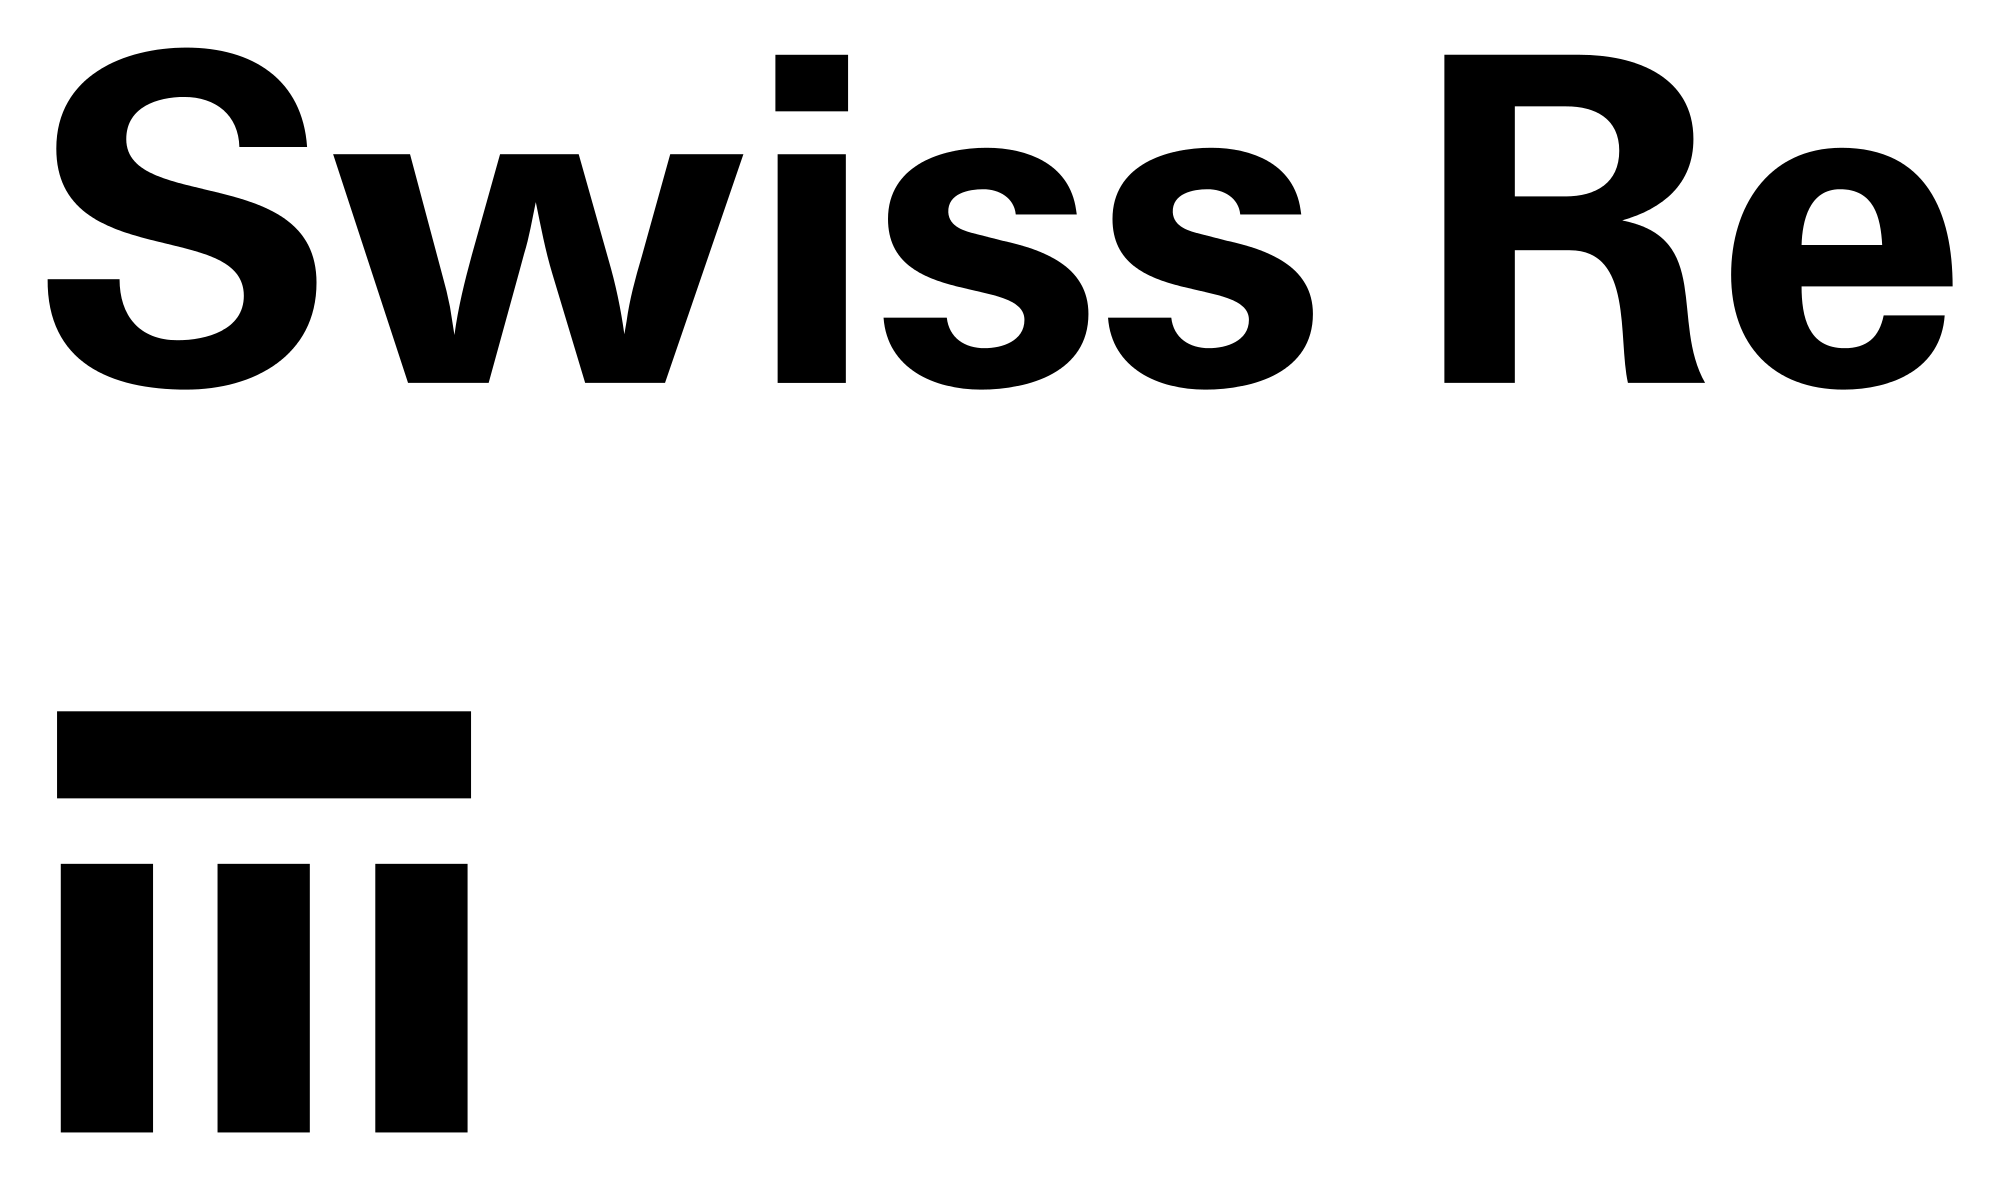 Re Logo - Swiss Re 2013 logo.svg